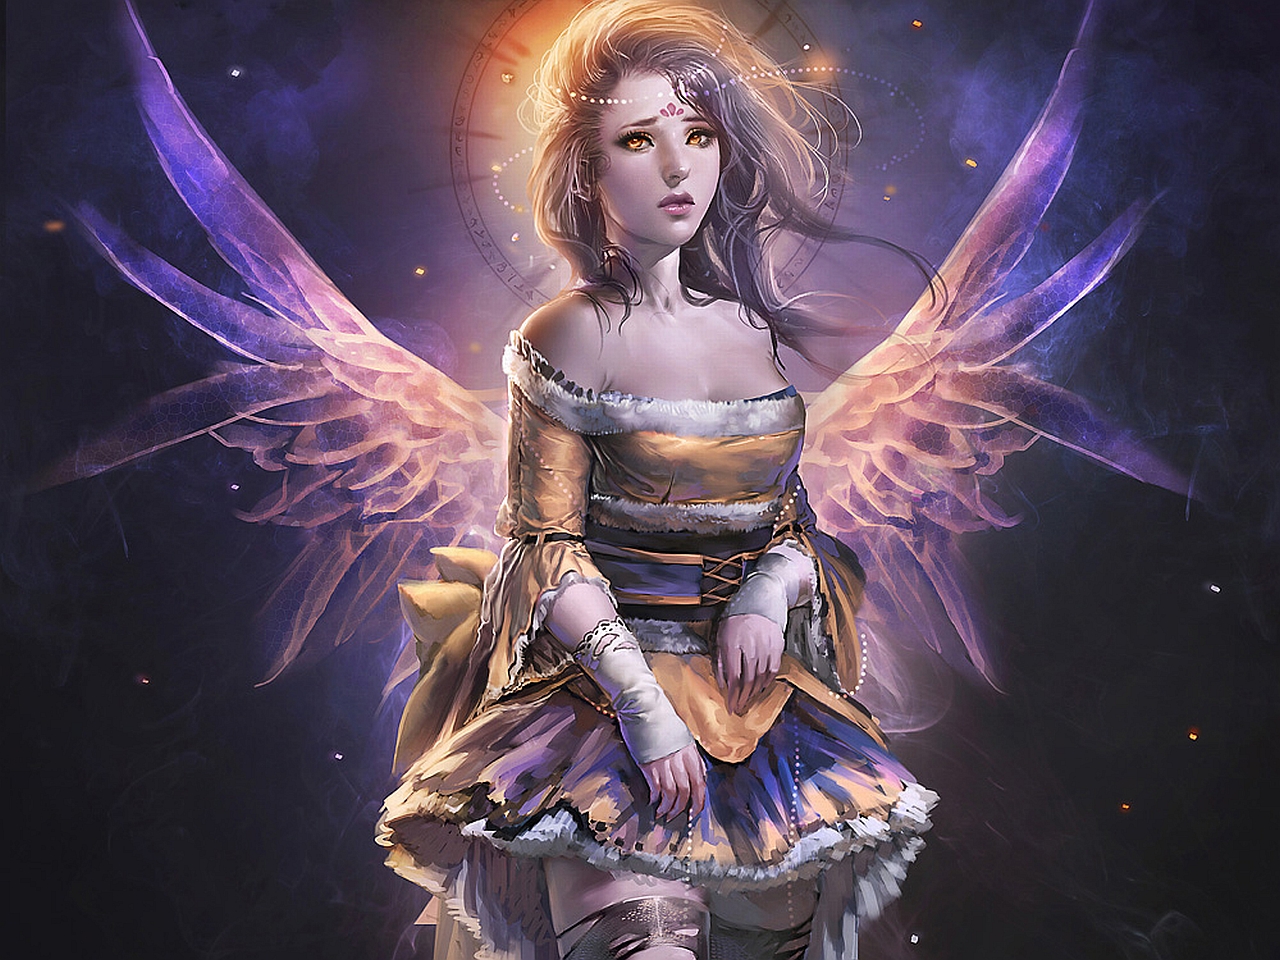 The Sad Face Wallpaper - Fairy Girl Fantasy Art - 1280x960 Wallpaper -  